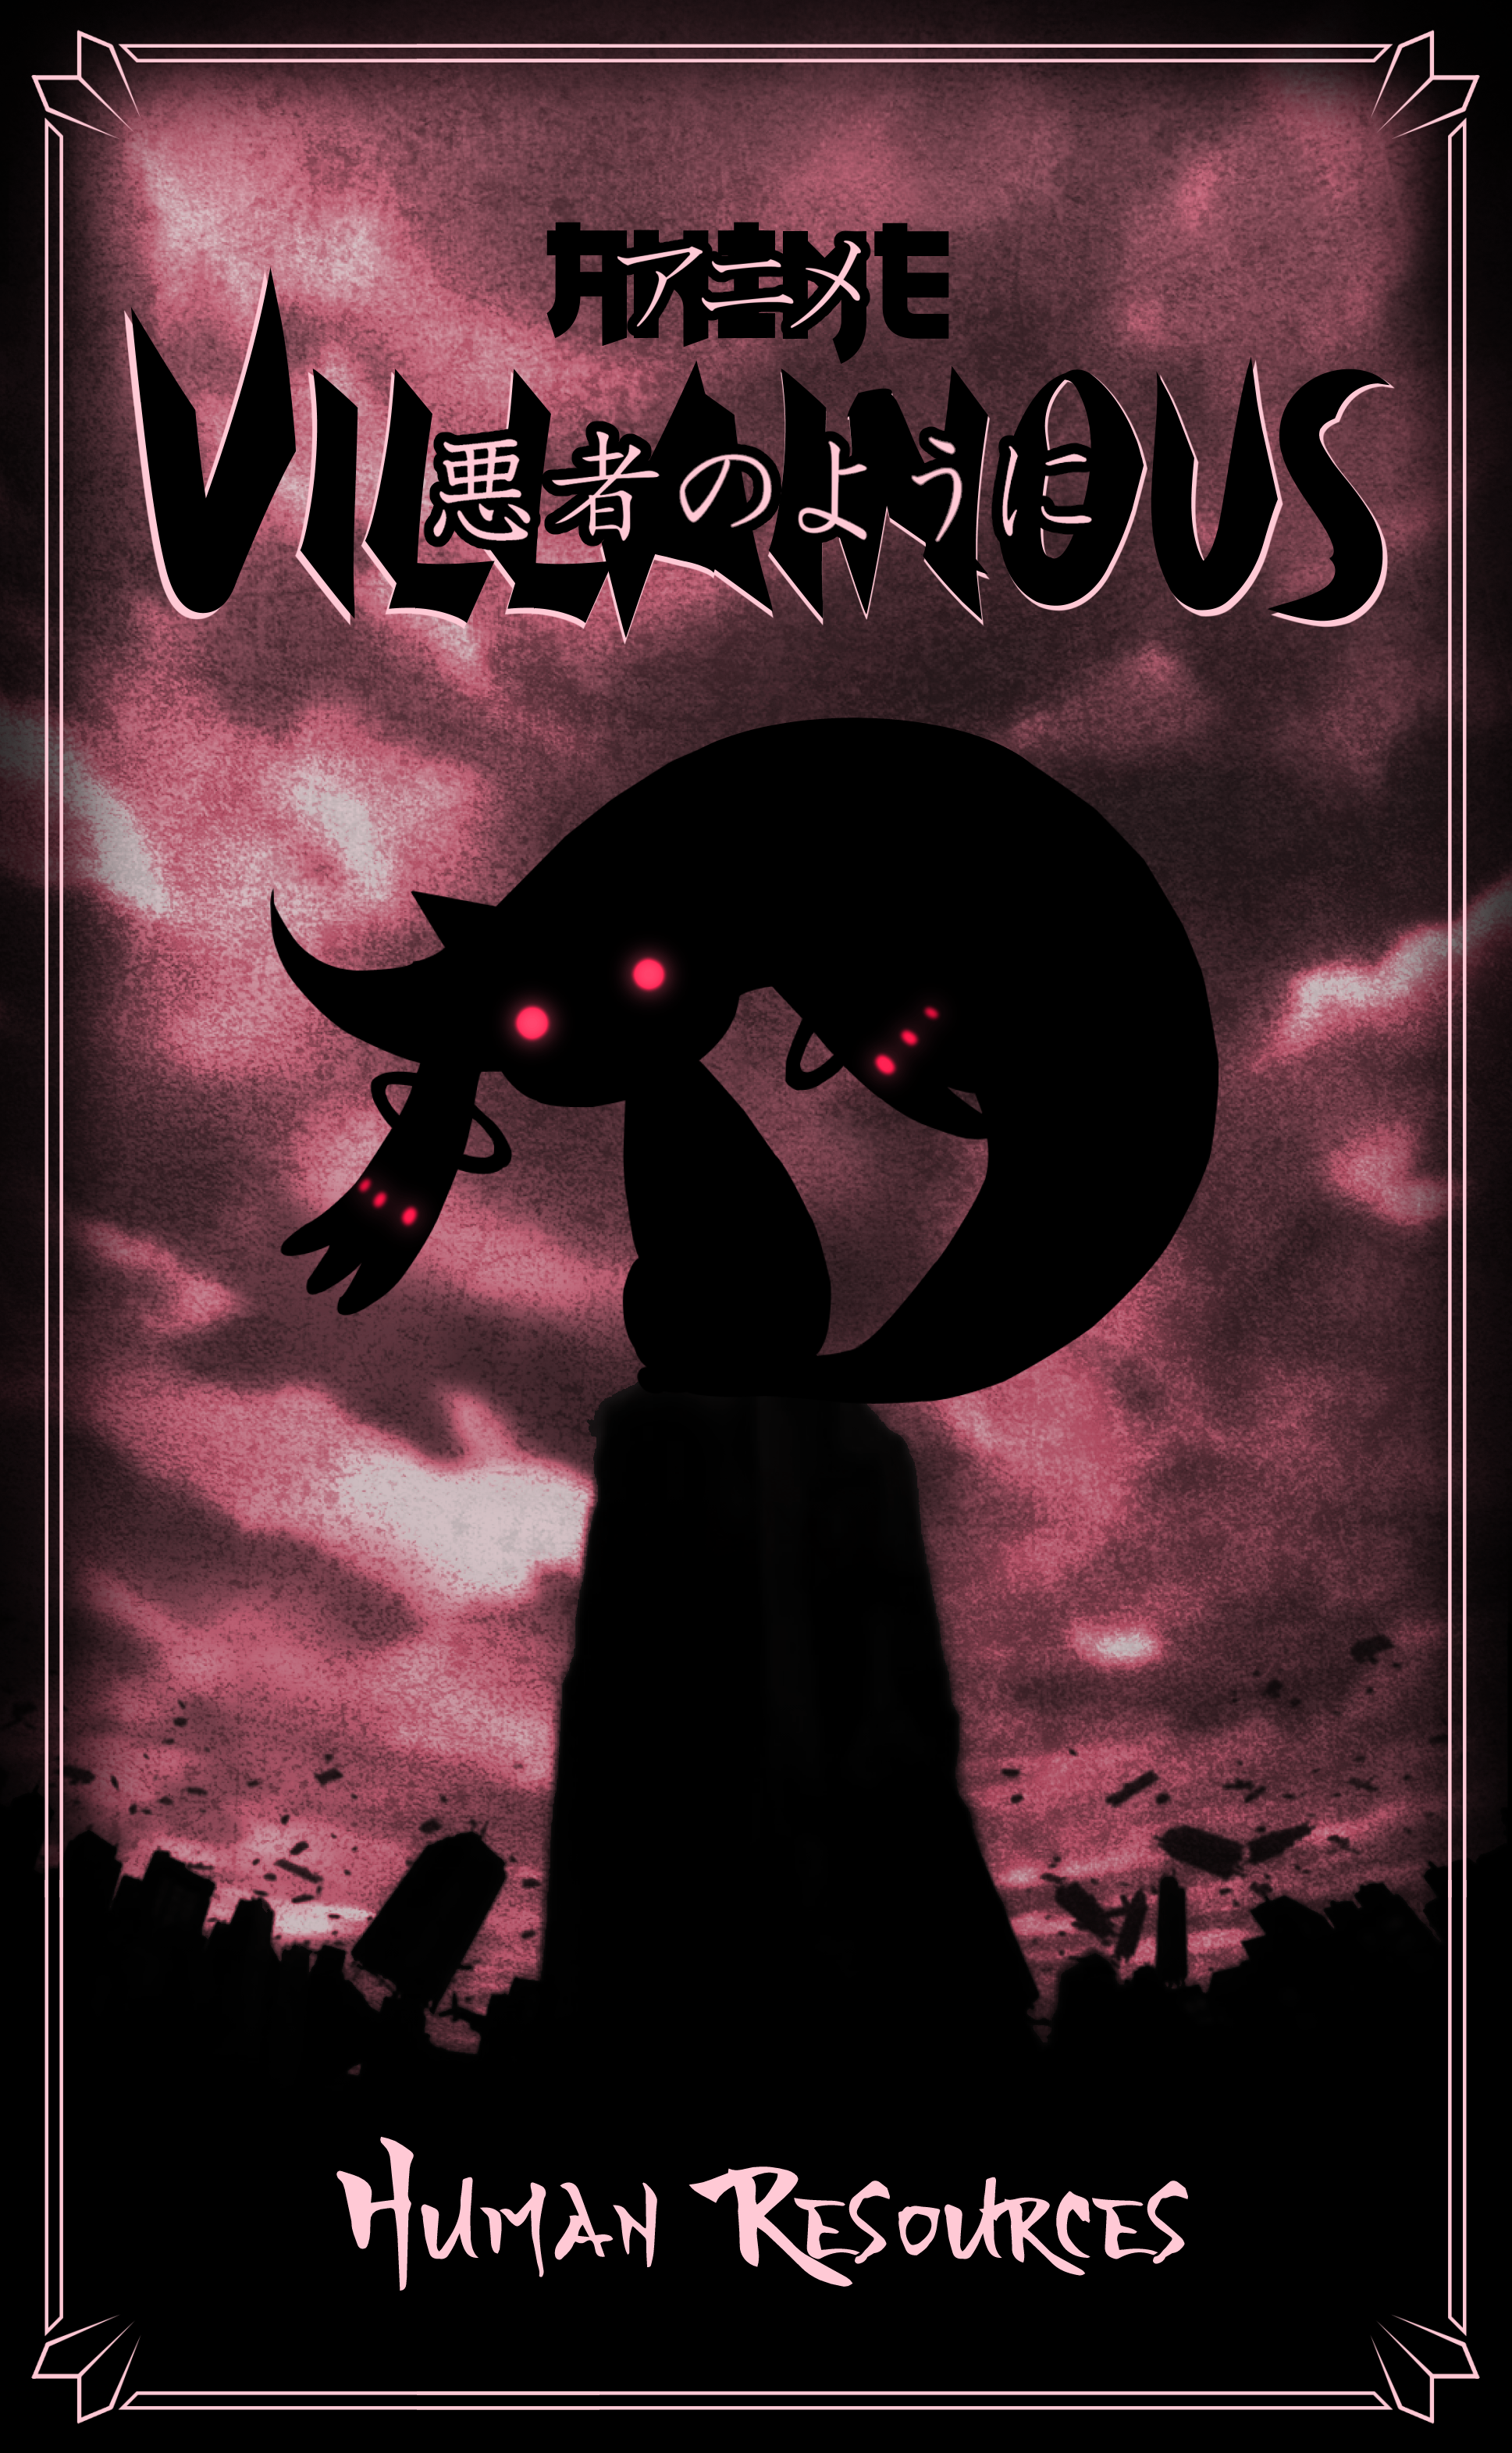 Anime Villainous is the biggest fan-made spinoff ever : r/DisneyVillainous